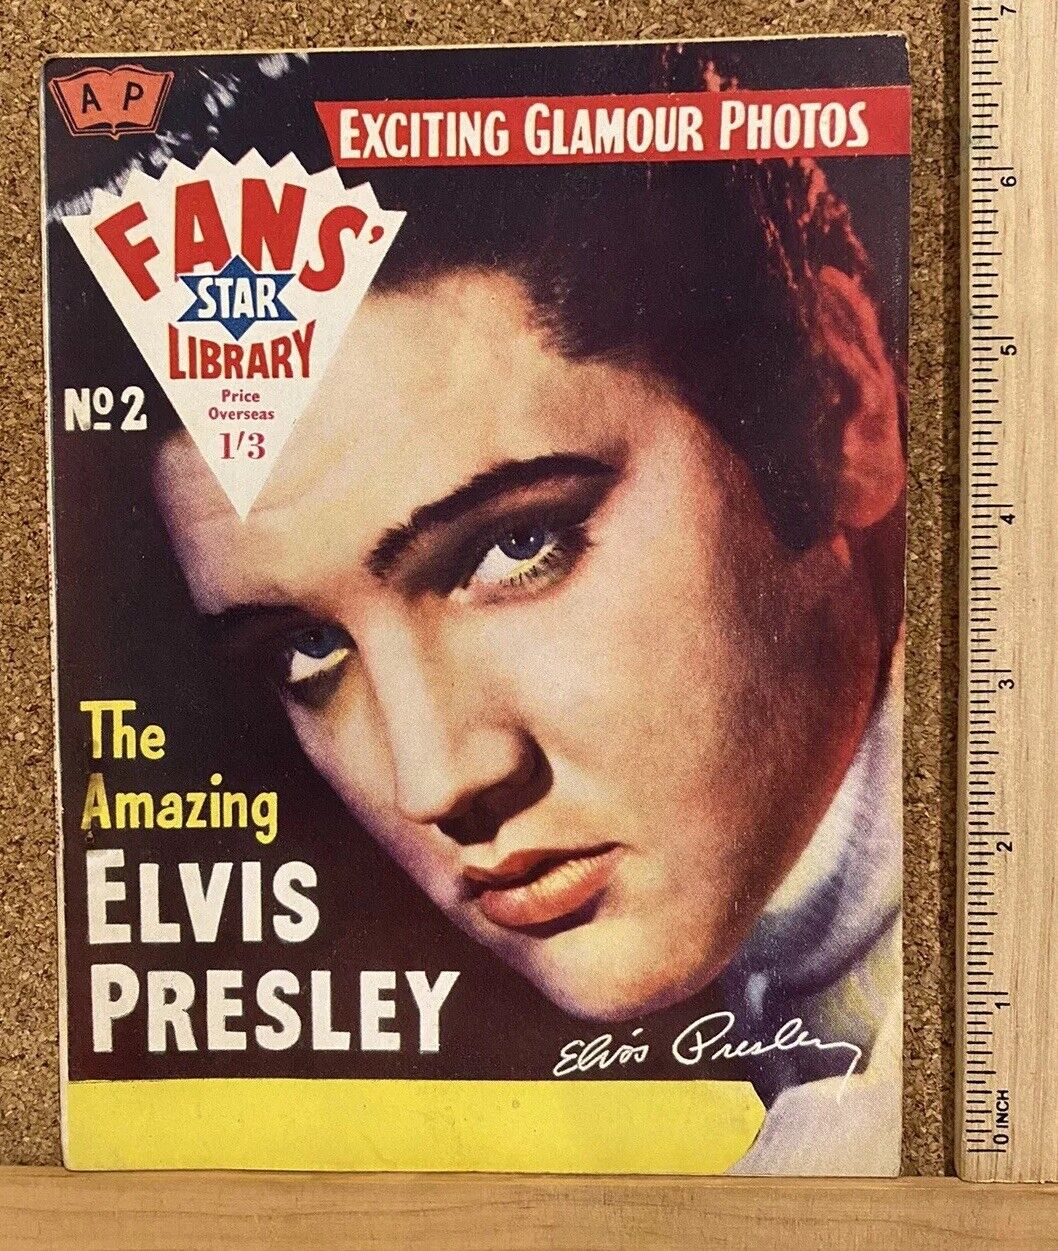 VINTAGE 1958 ELVIS PRESLEY FAN'S STAR LIBRARY ENGLAND MINI ROCK PHOTO MAGAZINE